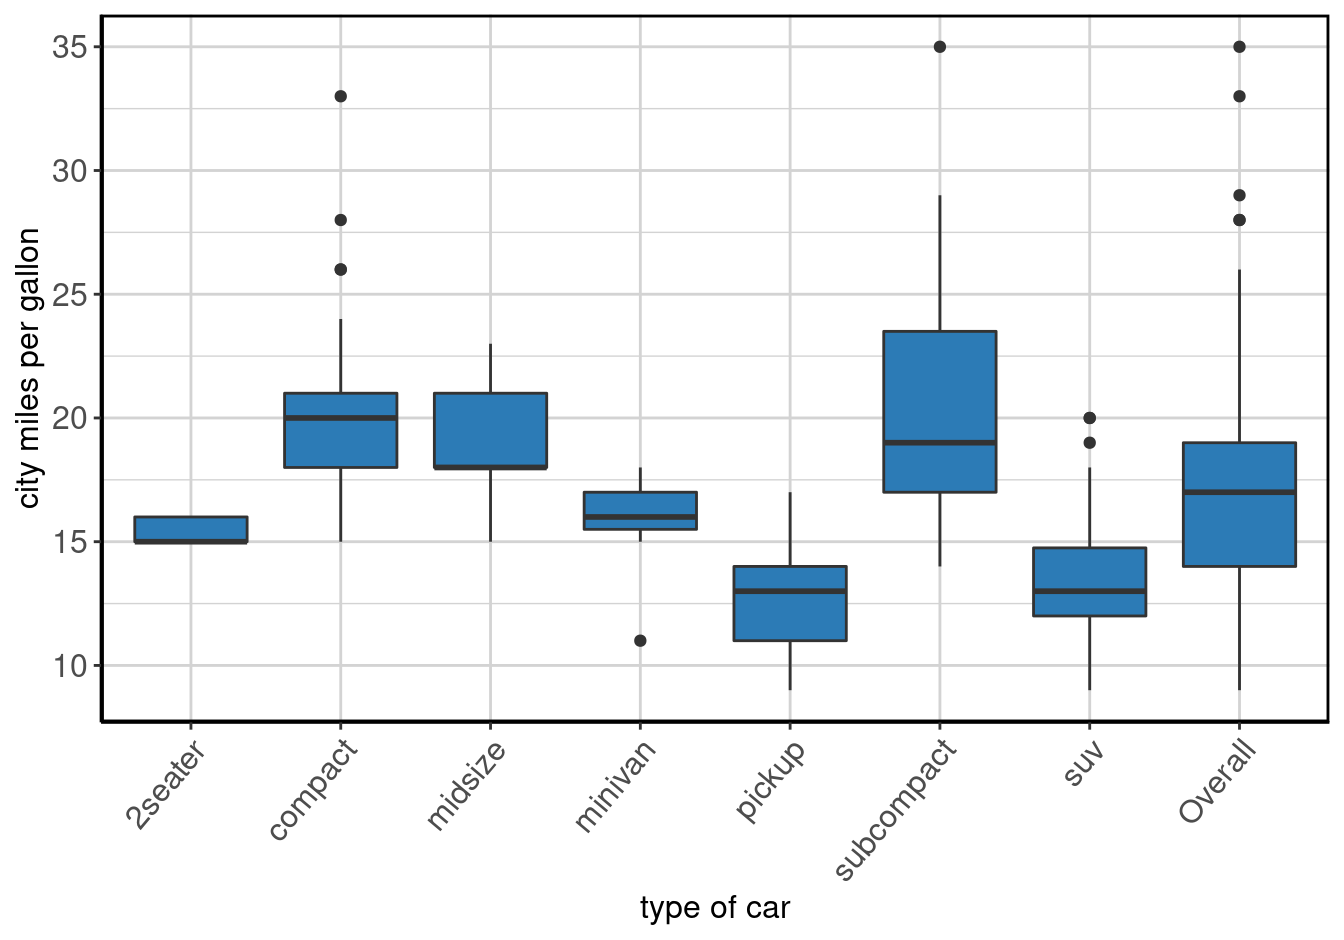 Boxplot of <b>city miles per gallon</b> by <b>type of car</b>.